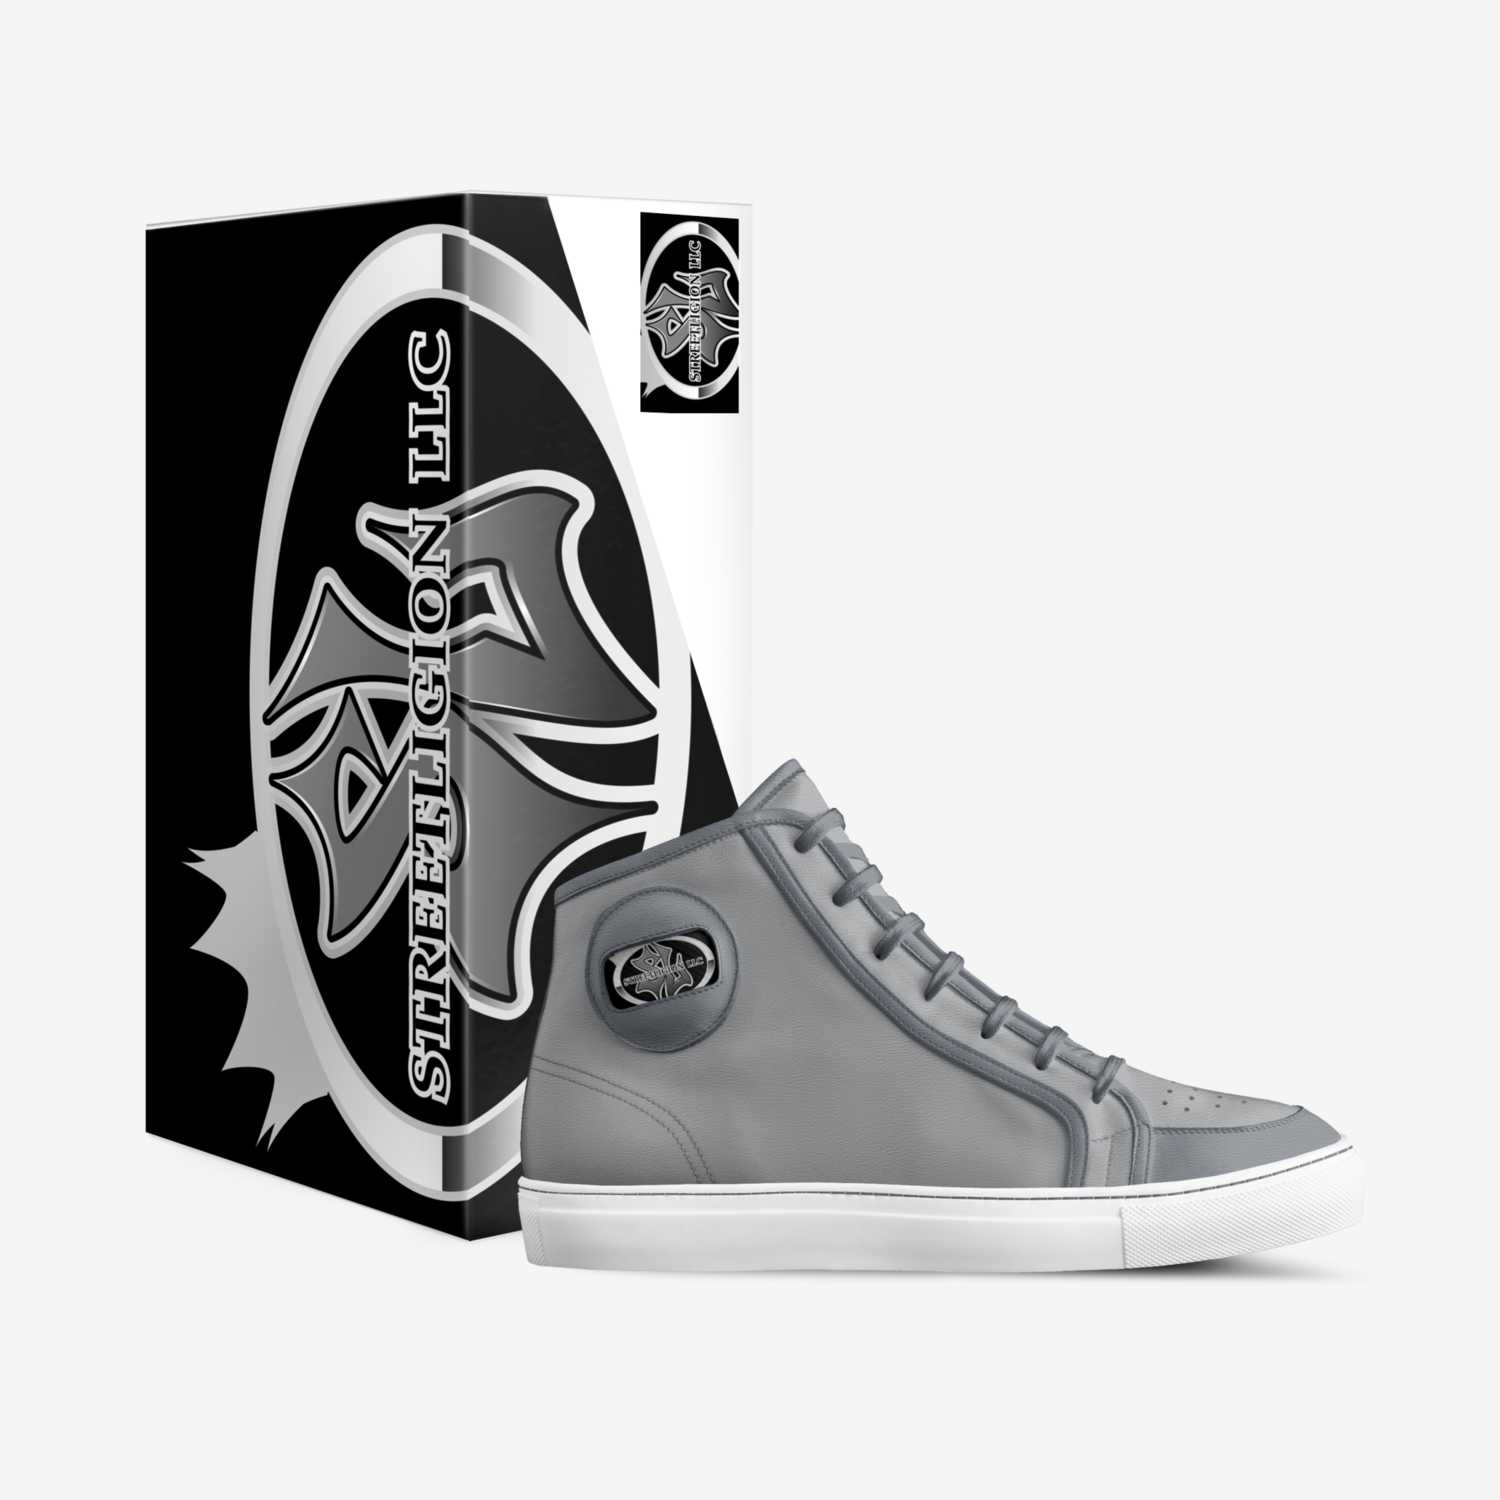 StreetLigion426 custom made in Italy shoes by Cedric.bellamy84 Bellamy | Box view